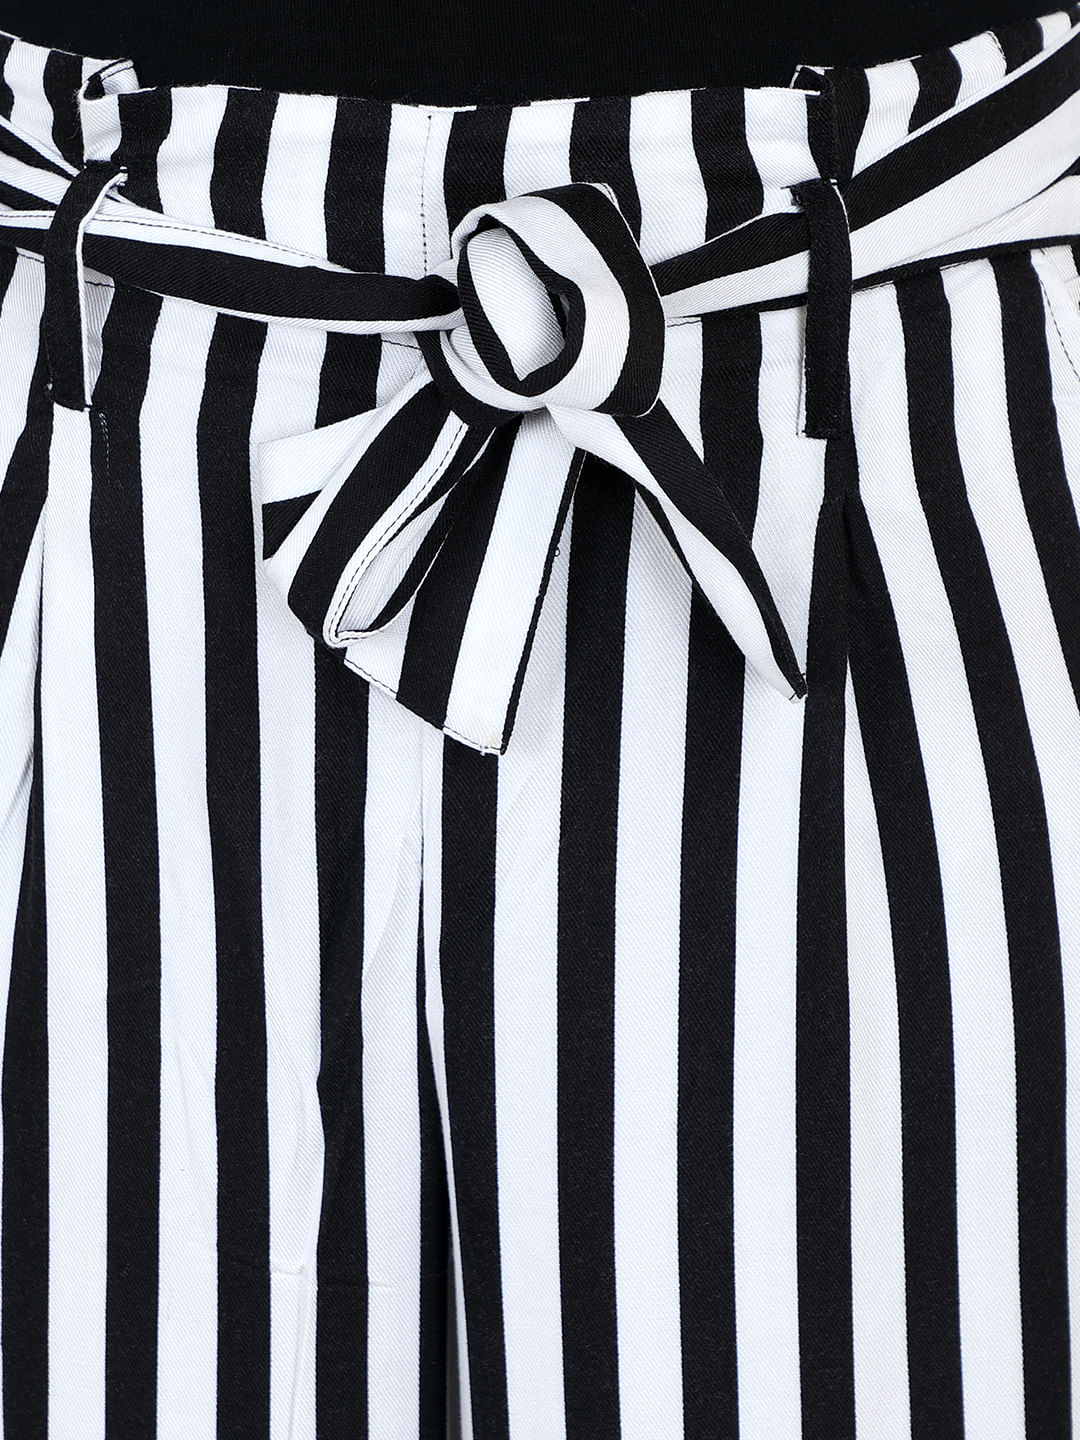 Buy Plus Size White Black Stripes Lounge Pants Online For Women